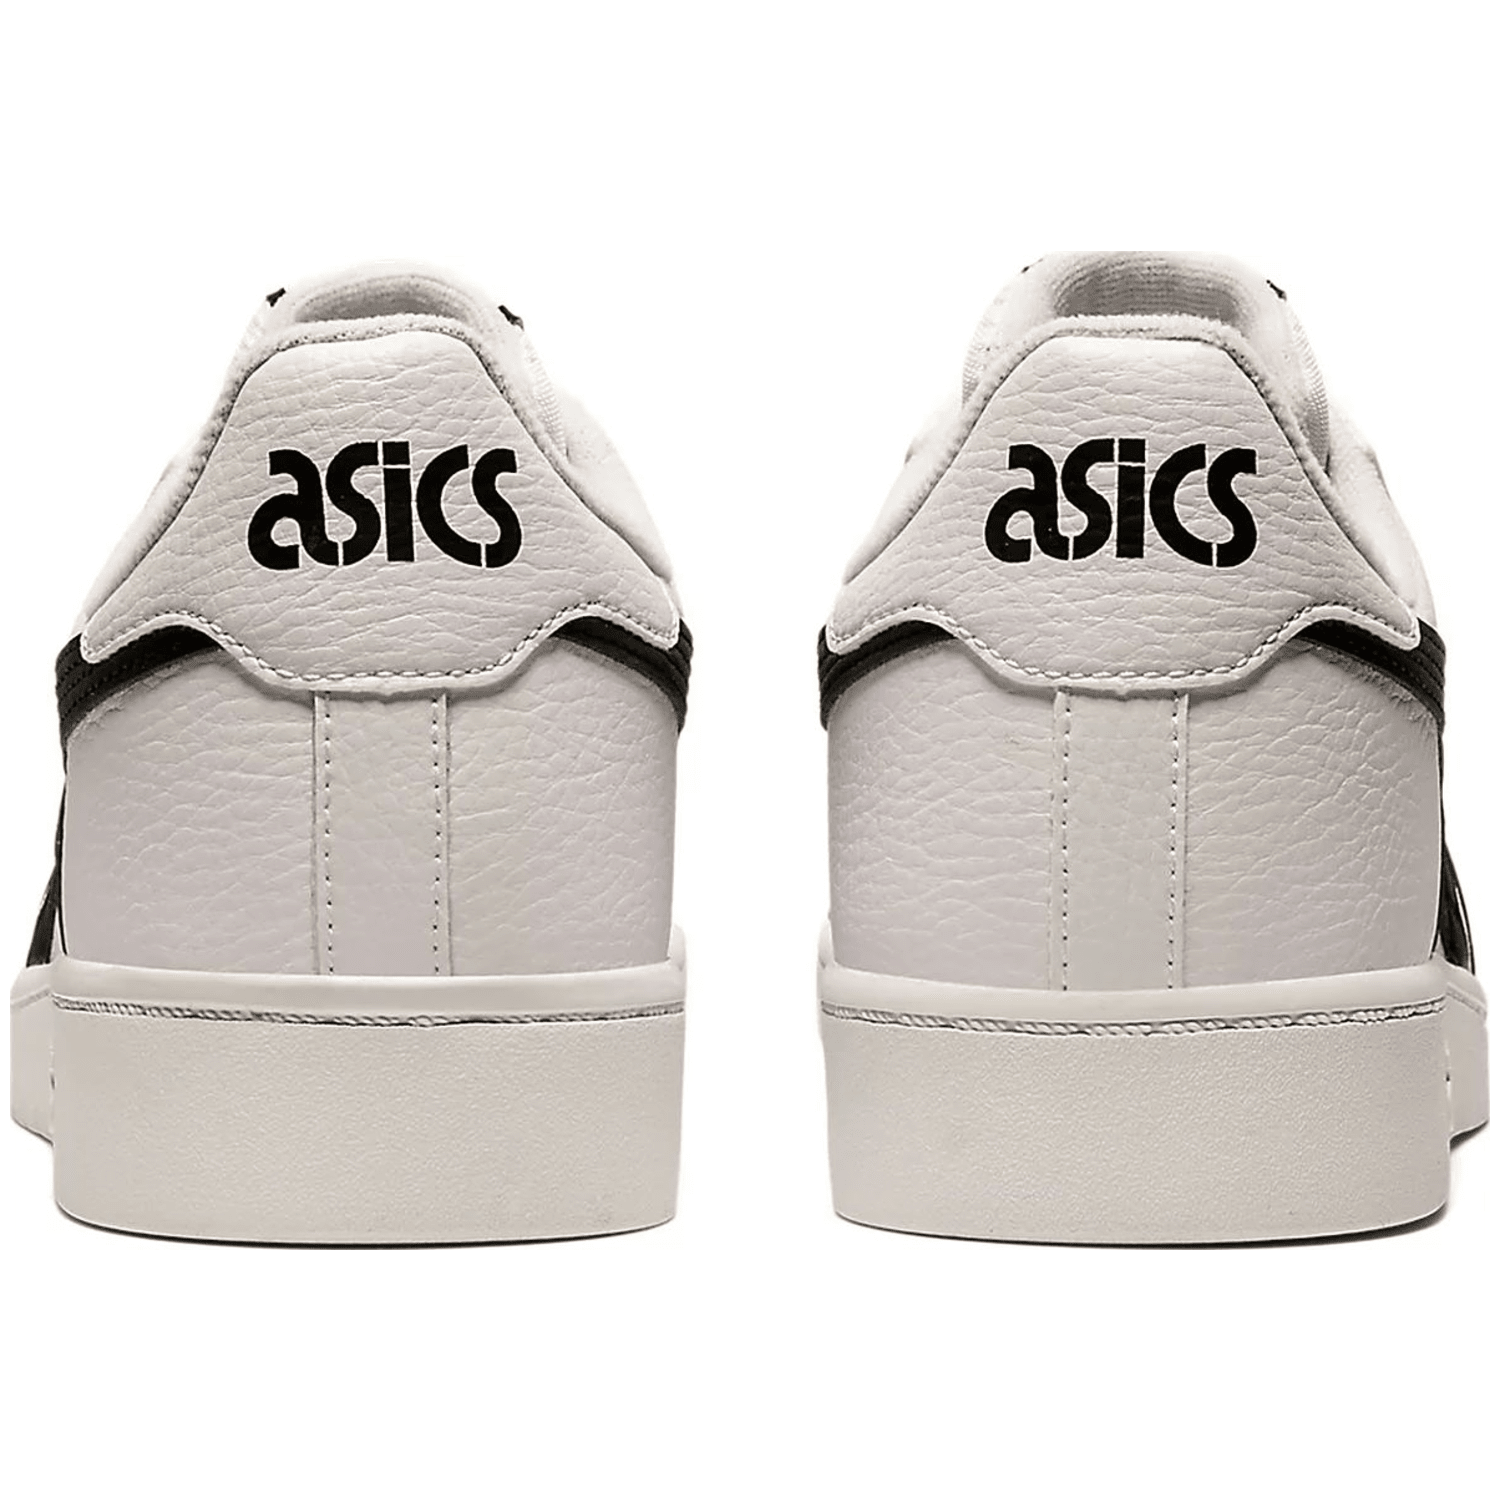 Asics Japan S Herren Lifestyle-Schuh